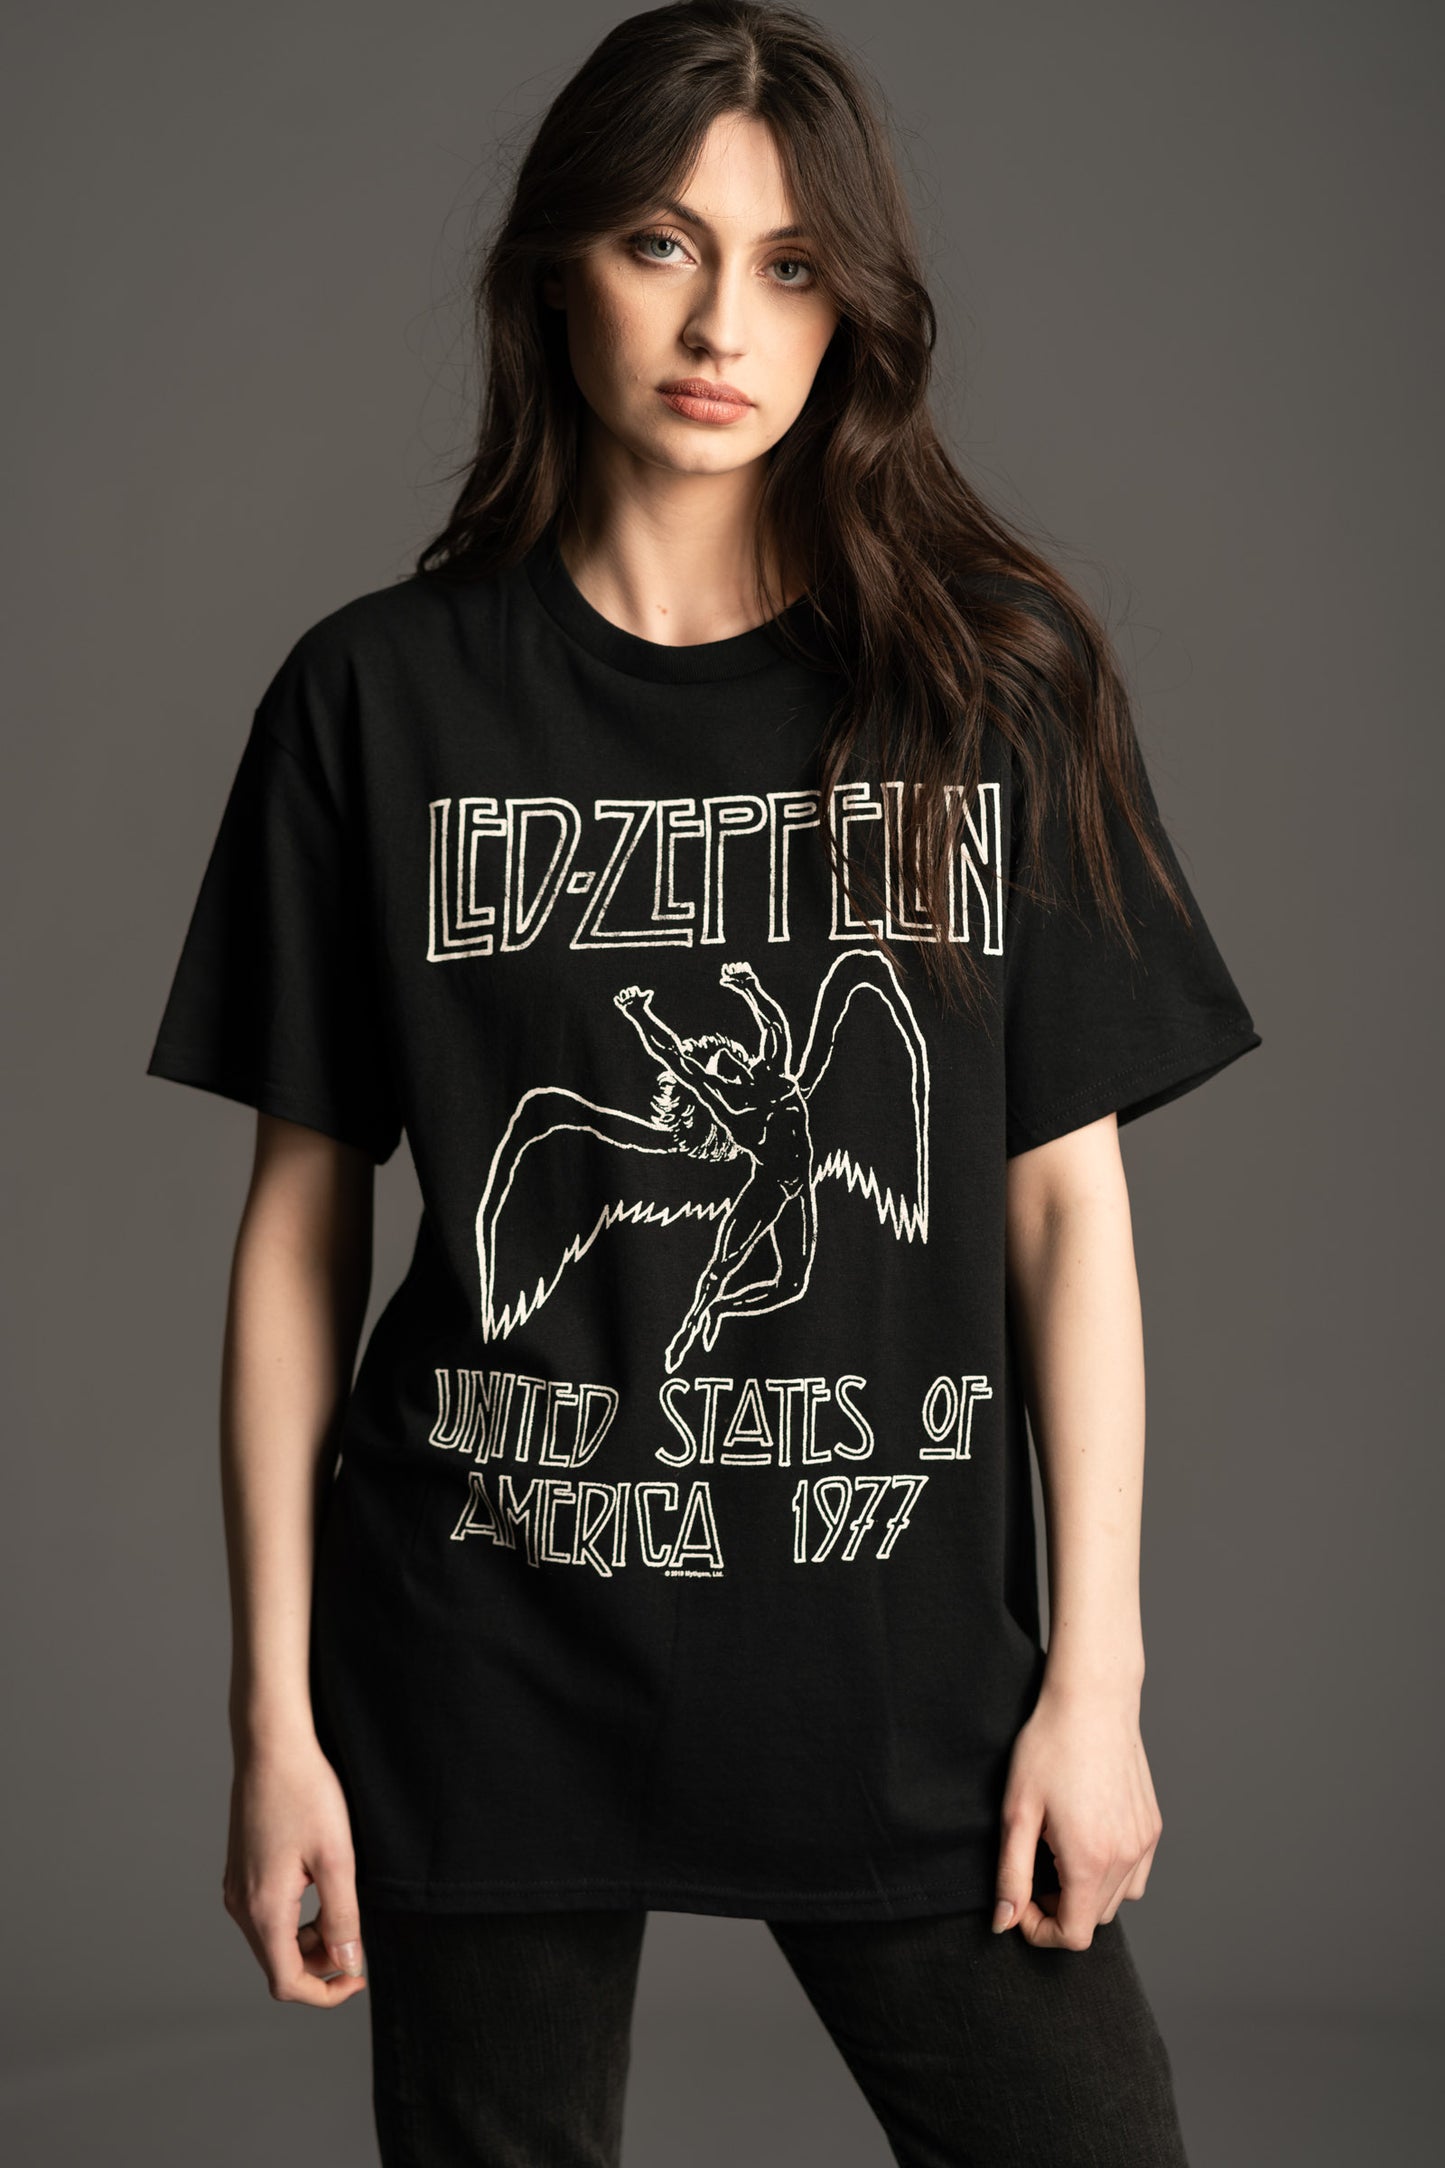 Led Zeppelin '77 Tee